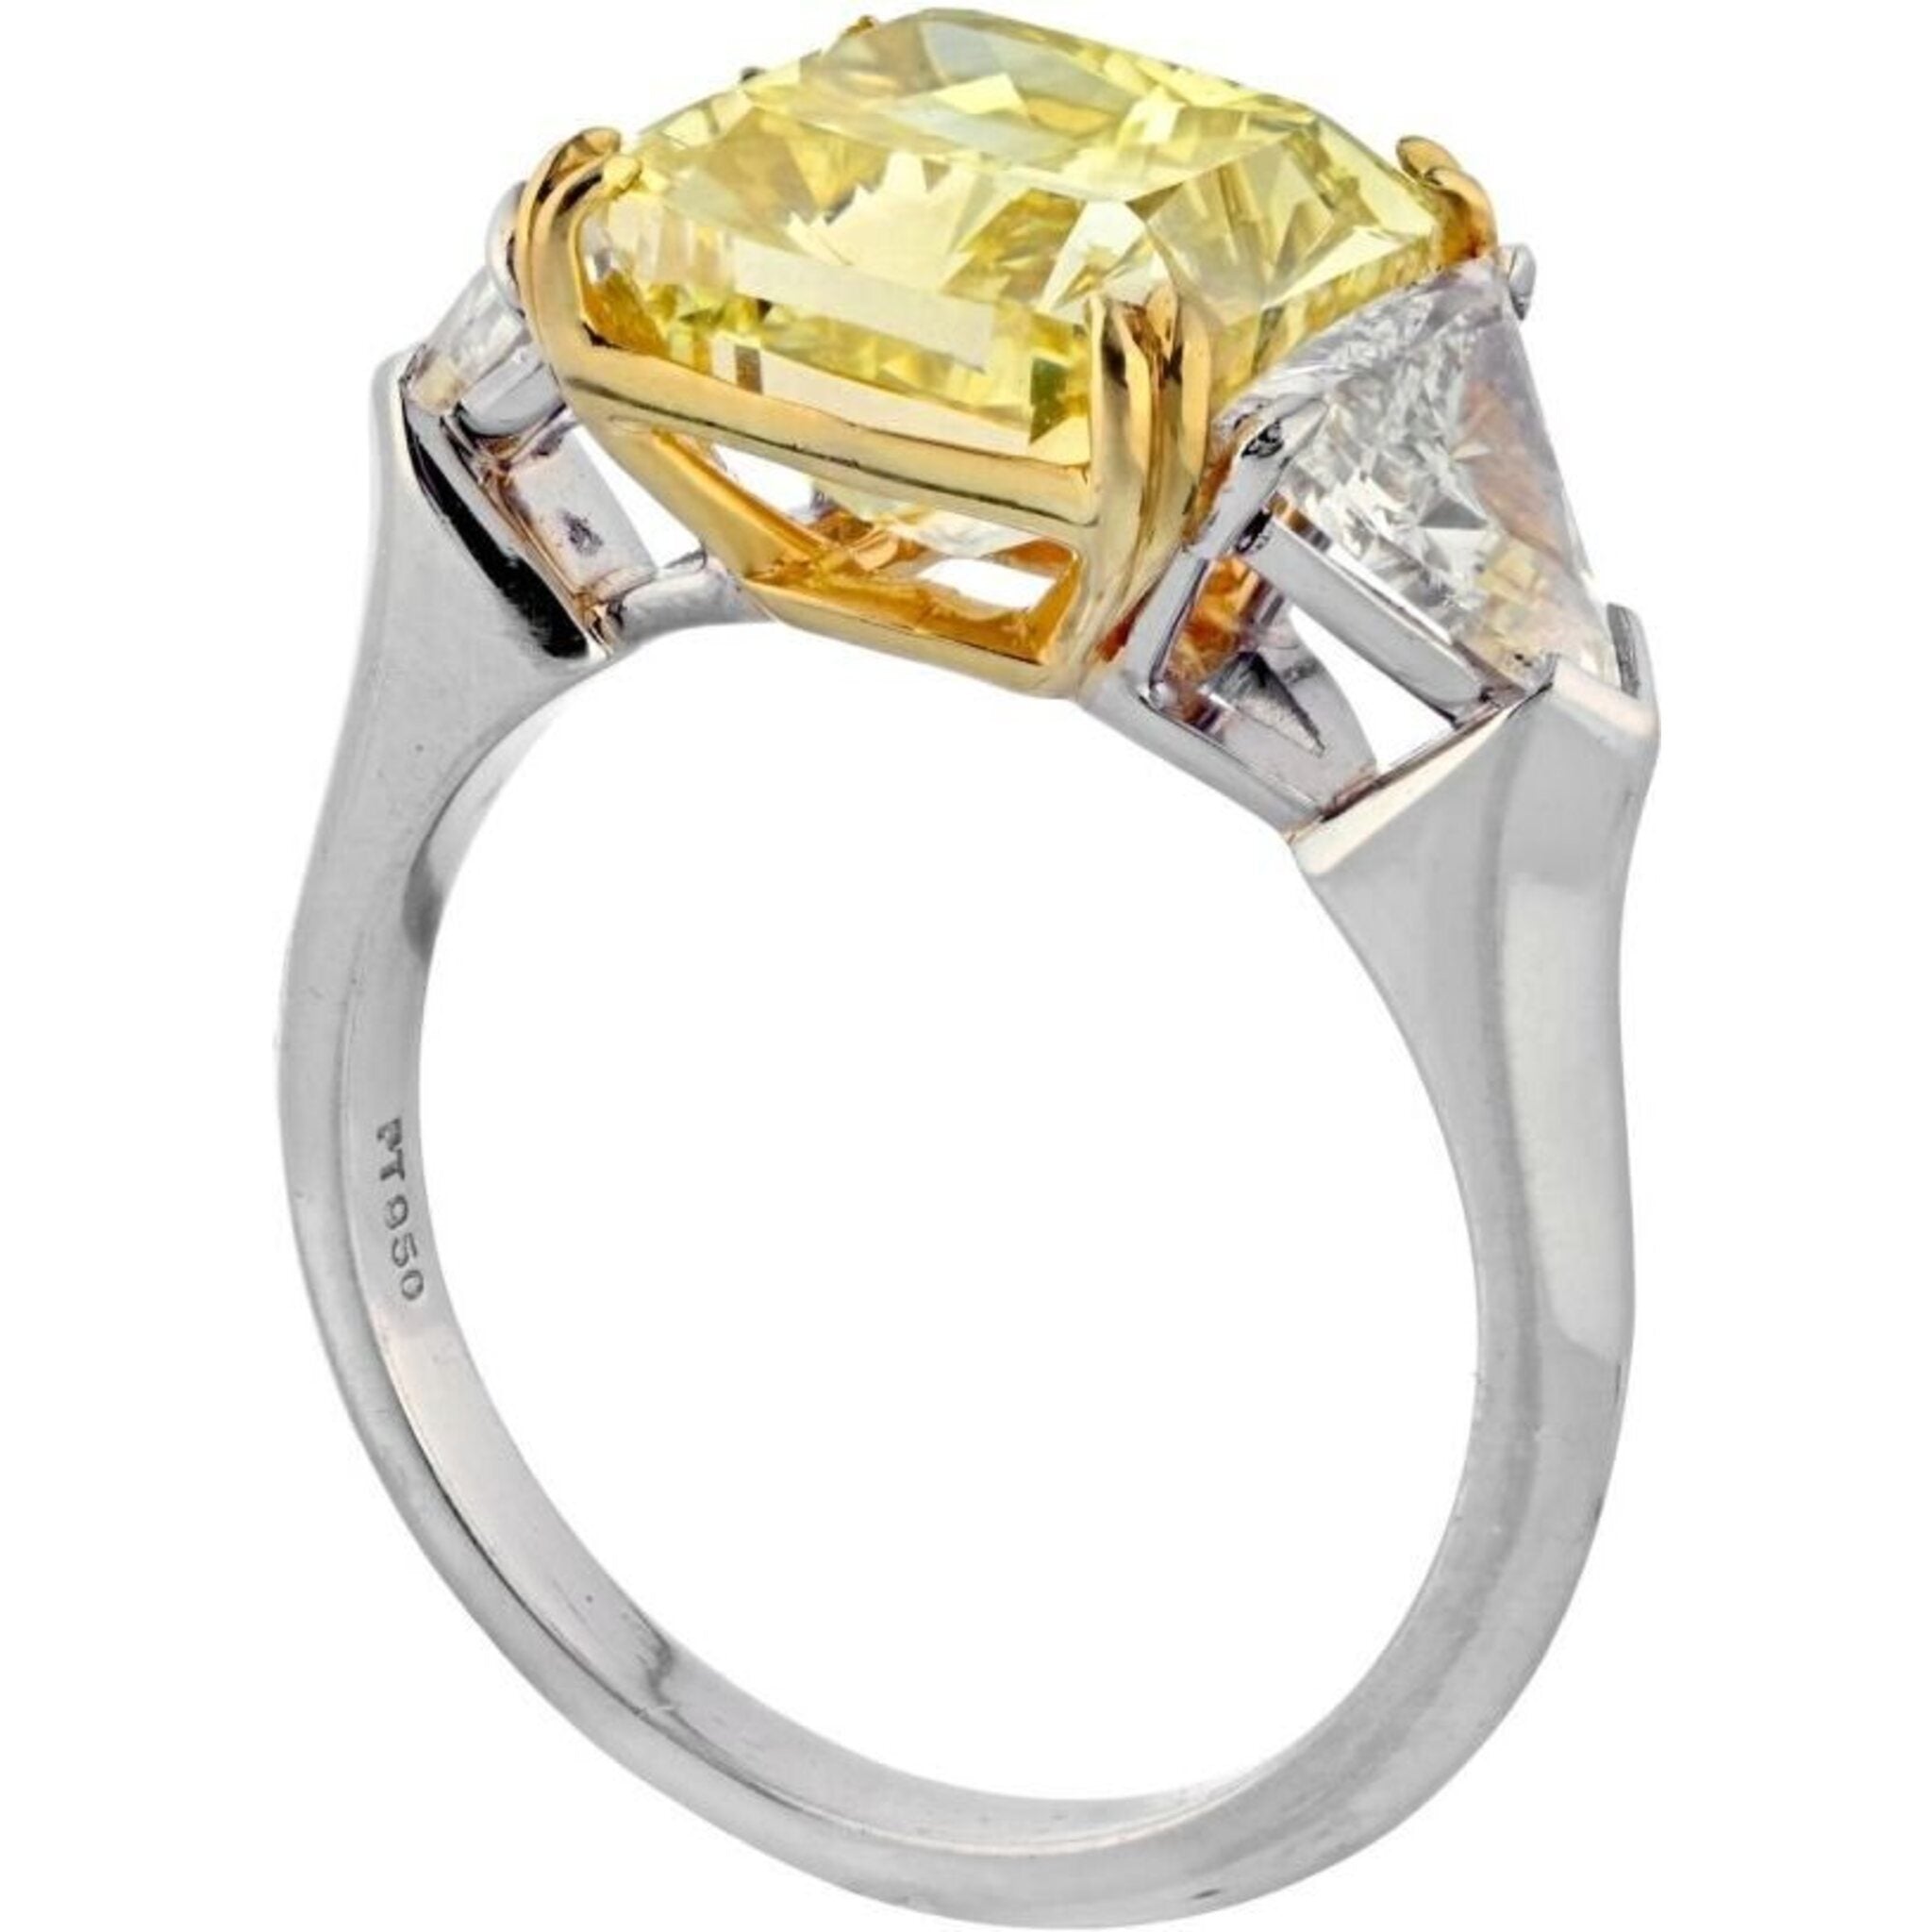 5 Carat Square Radiant Cut Three Stone Diamond Engagement Ring